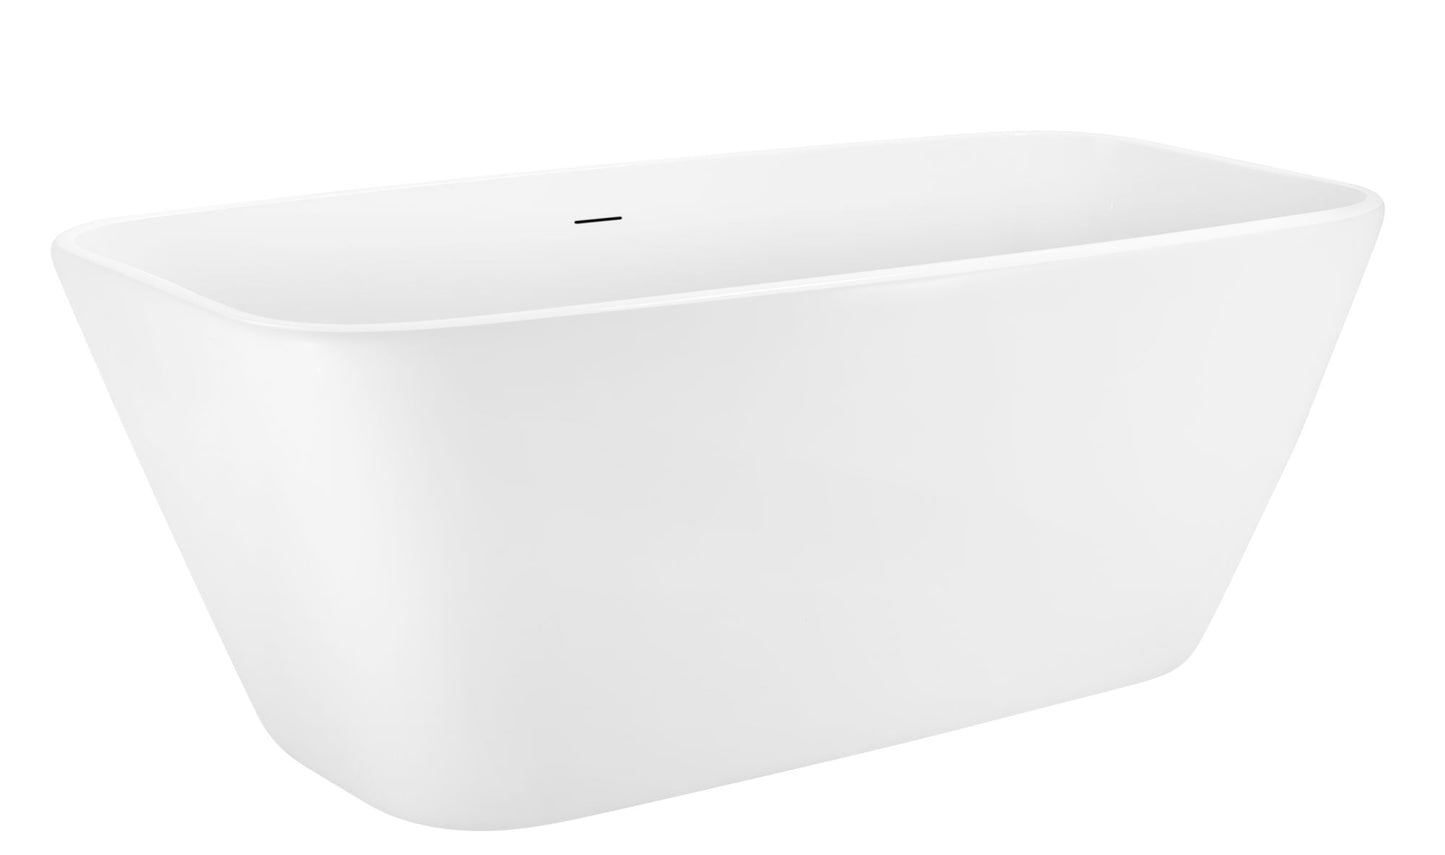 59" Acrylic Alcove Freestanding Soaking White Bathtub Rectangular shape - Home Decor by Design